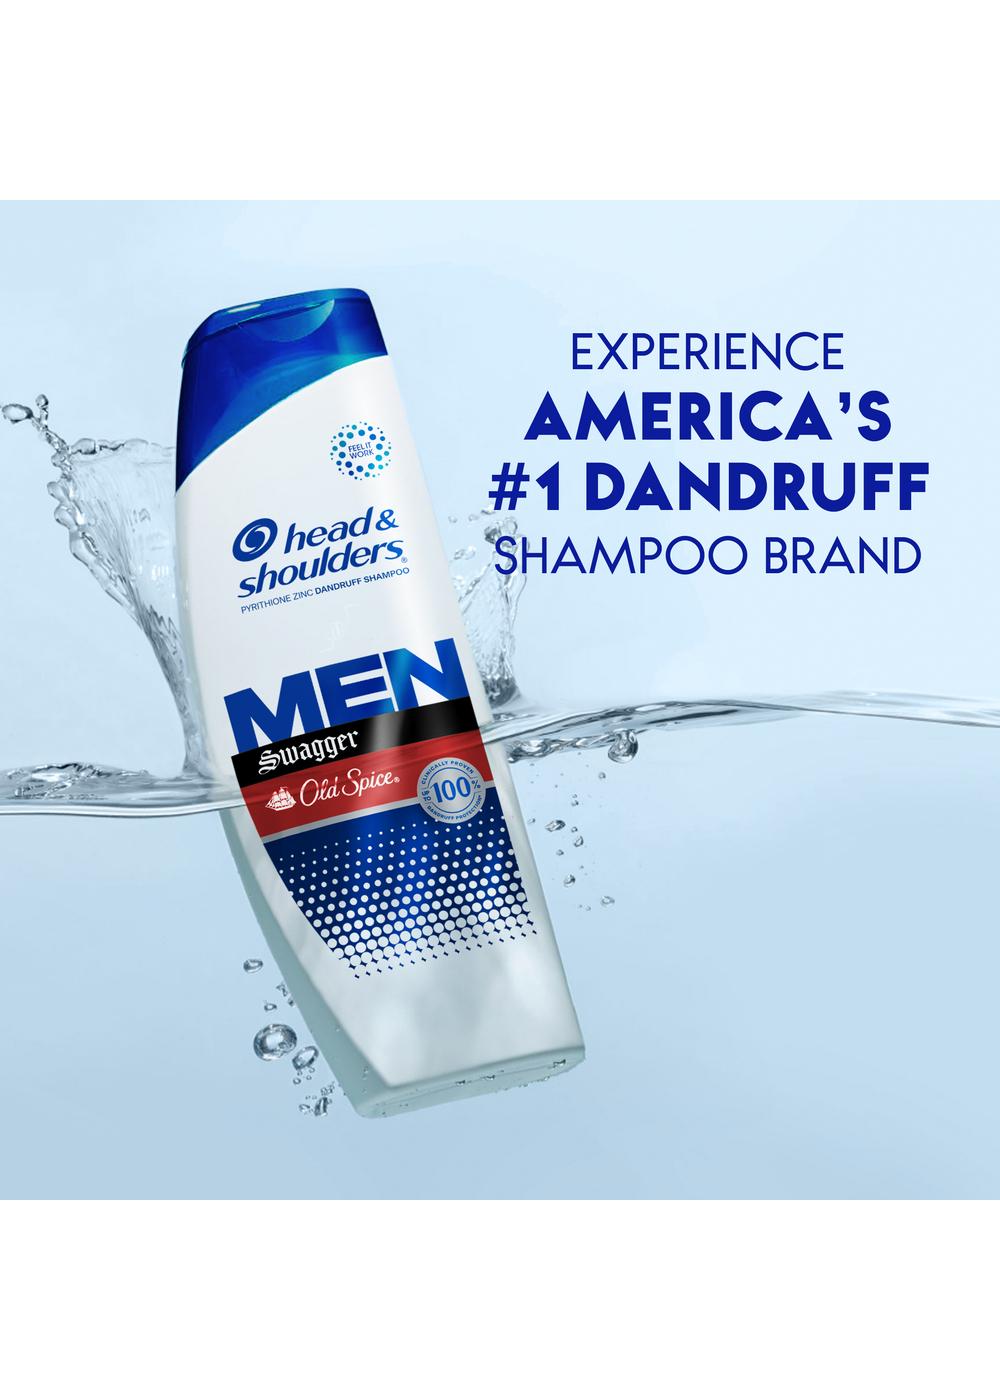 Head & Shoulders Old Spice Men Dandruff Shampoo - Swagger; image 3 of 11